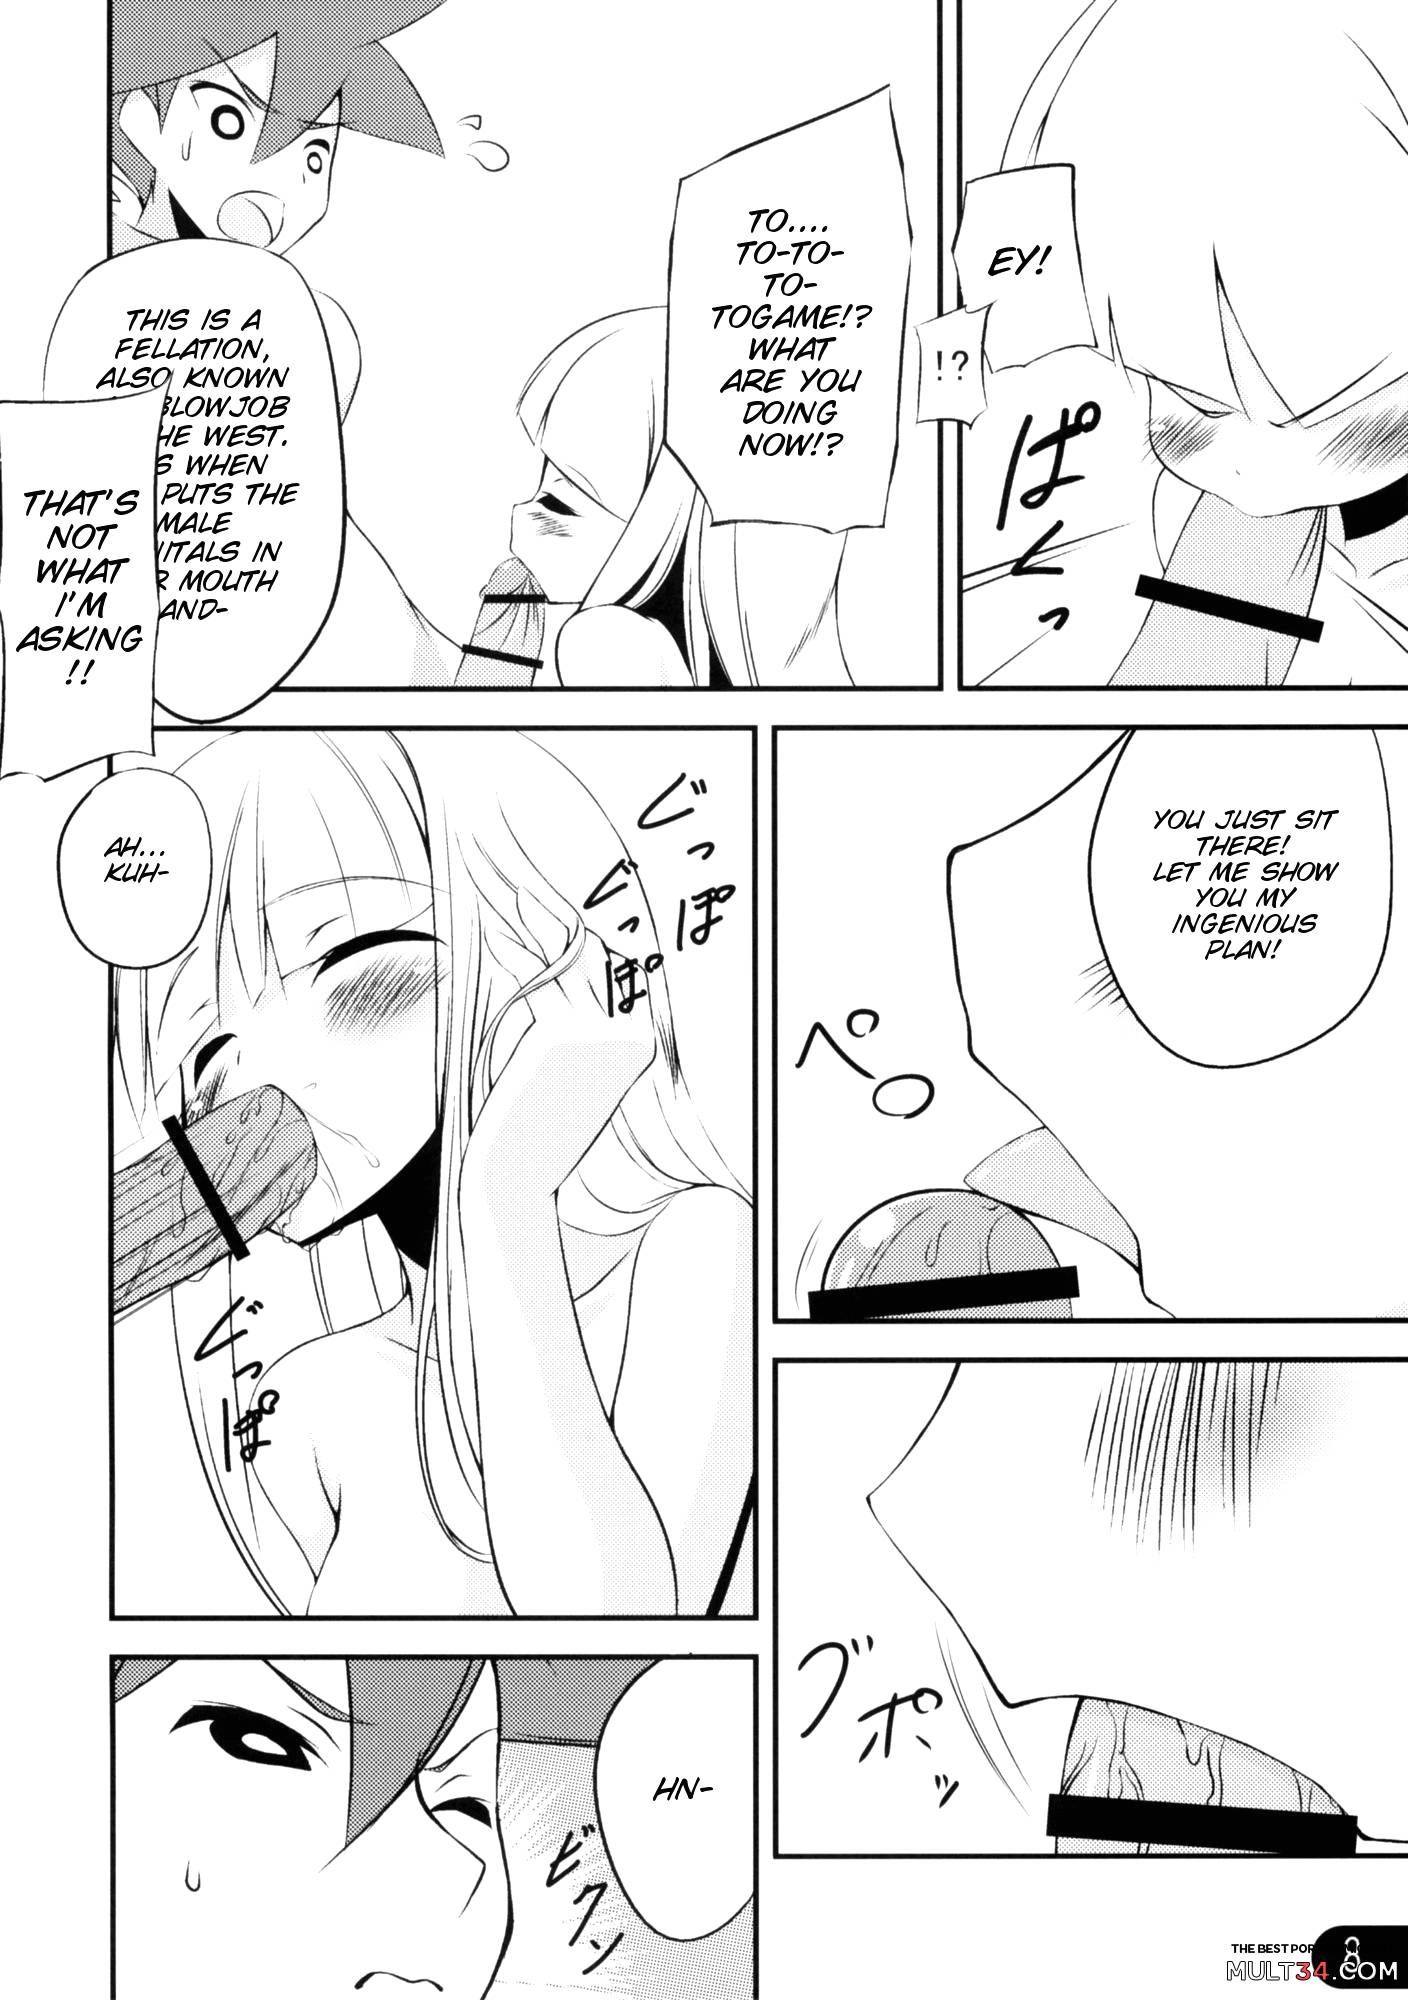 Honeypot - Hentai manga page 5